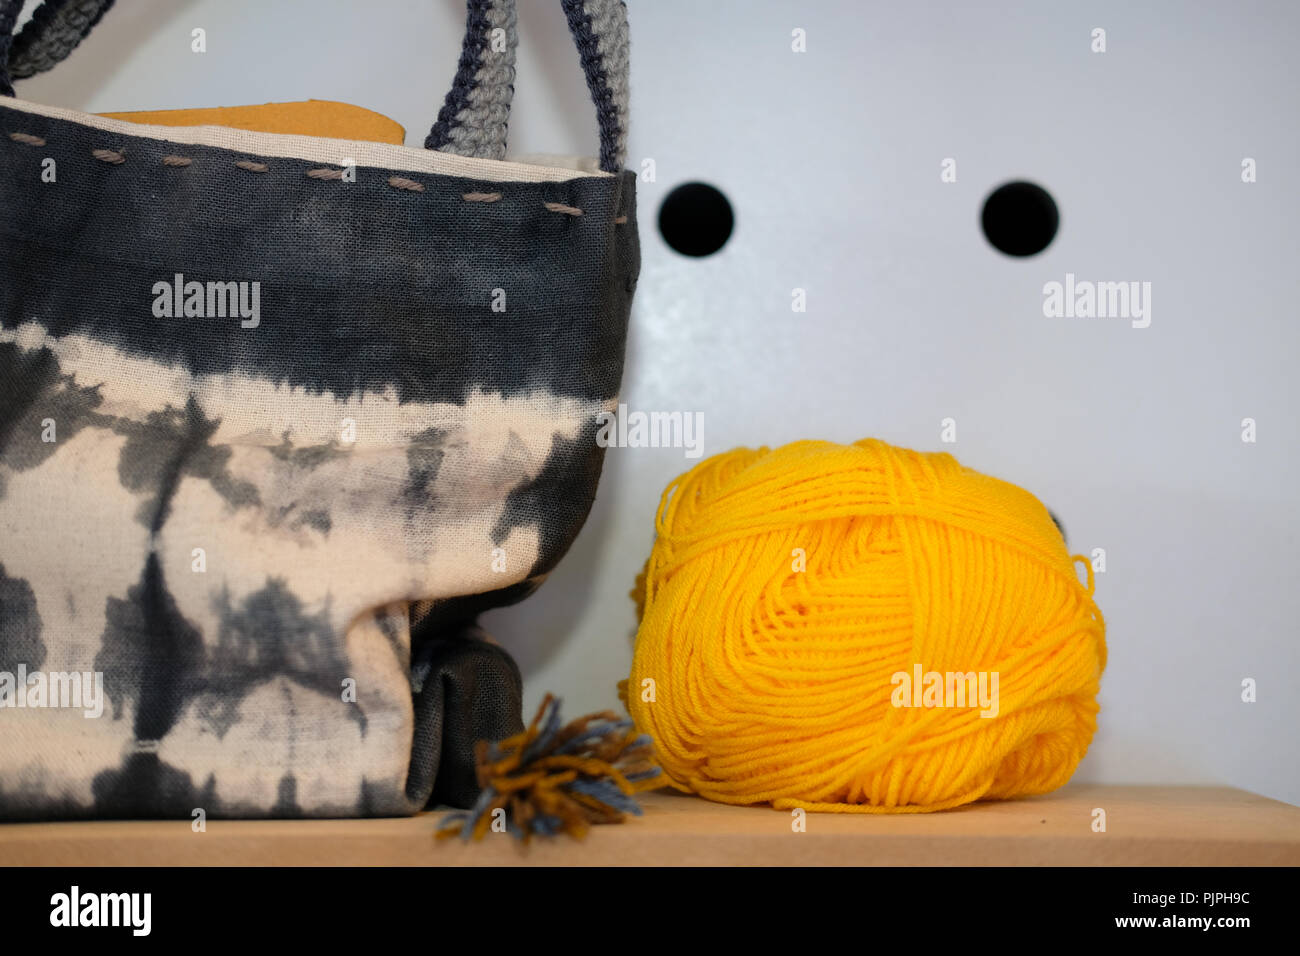 Knitting yarn bag